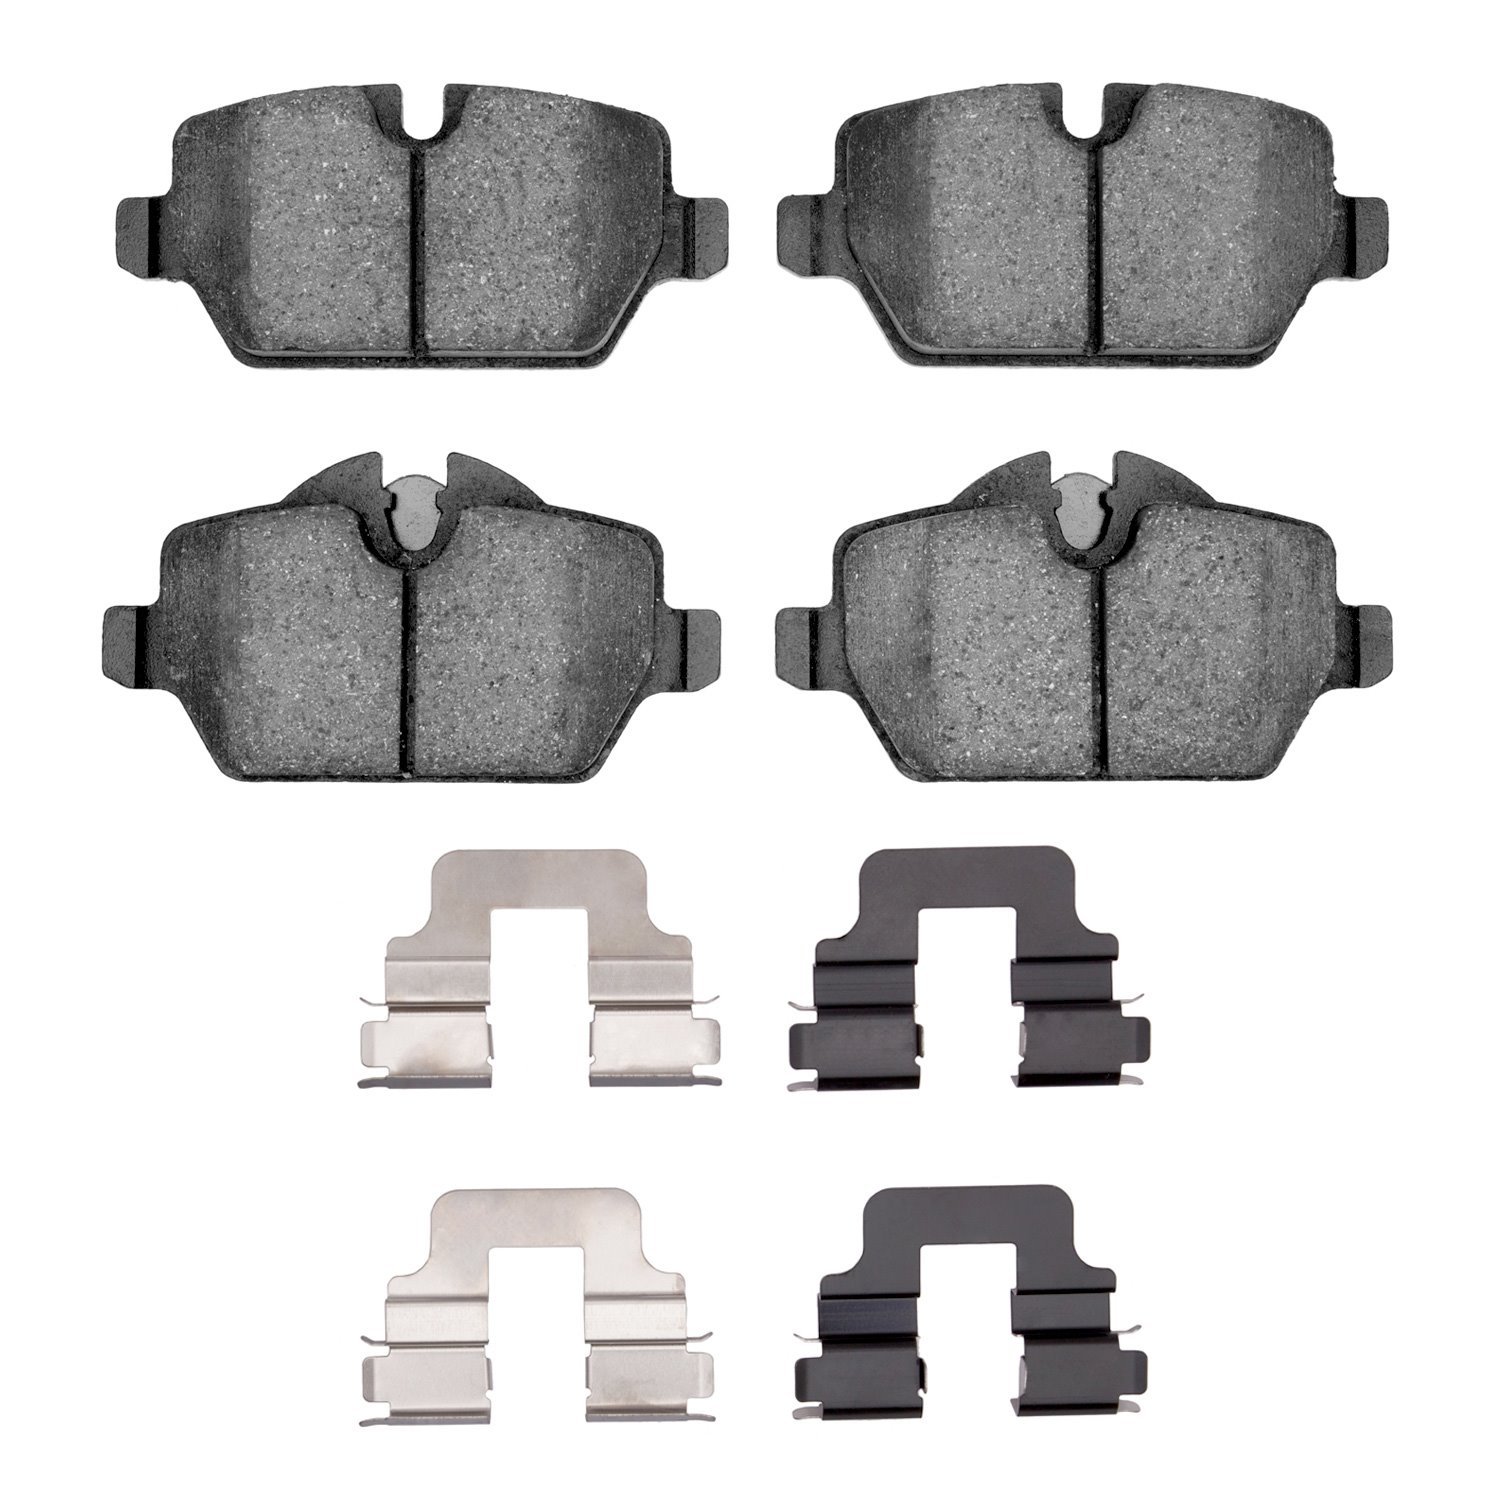 Euro Ceramic Brake Pads & Hardware Kit, 2005-2016 Fits Multiple Makes/Models, Position: Rear